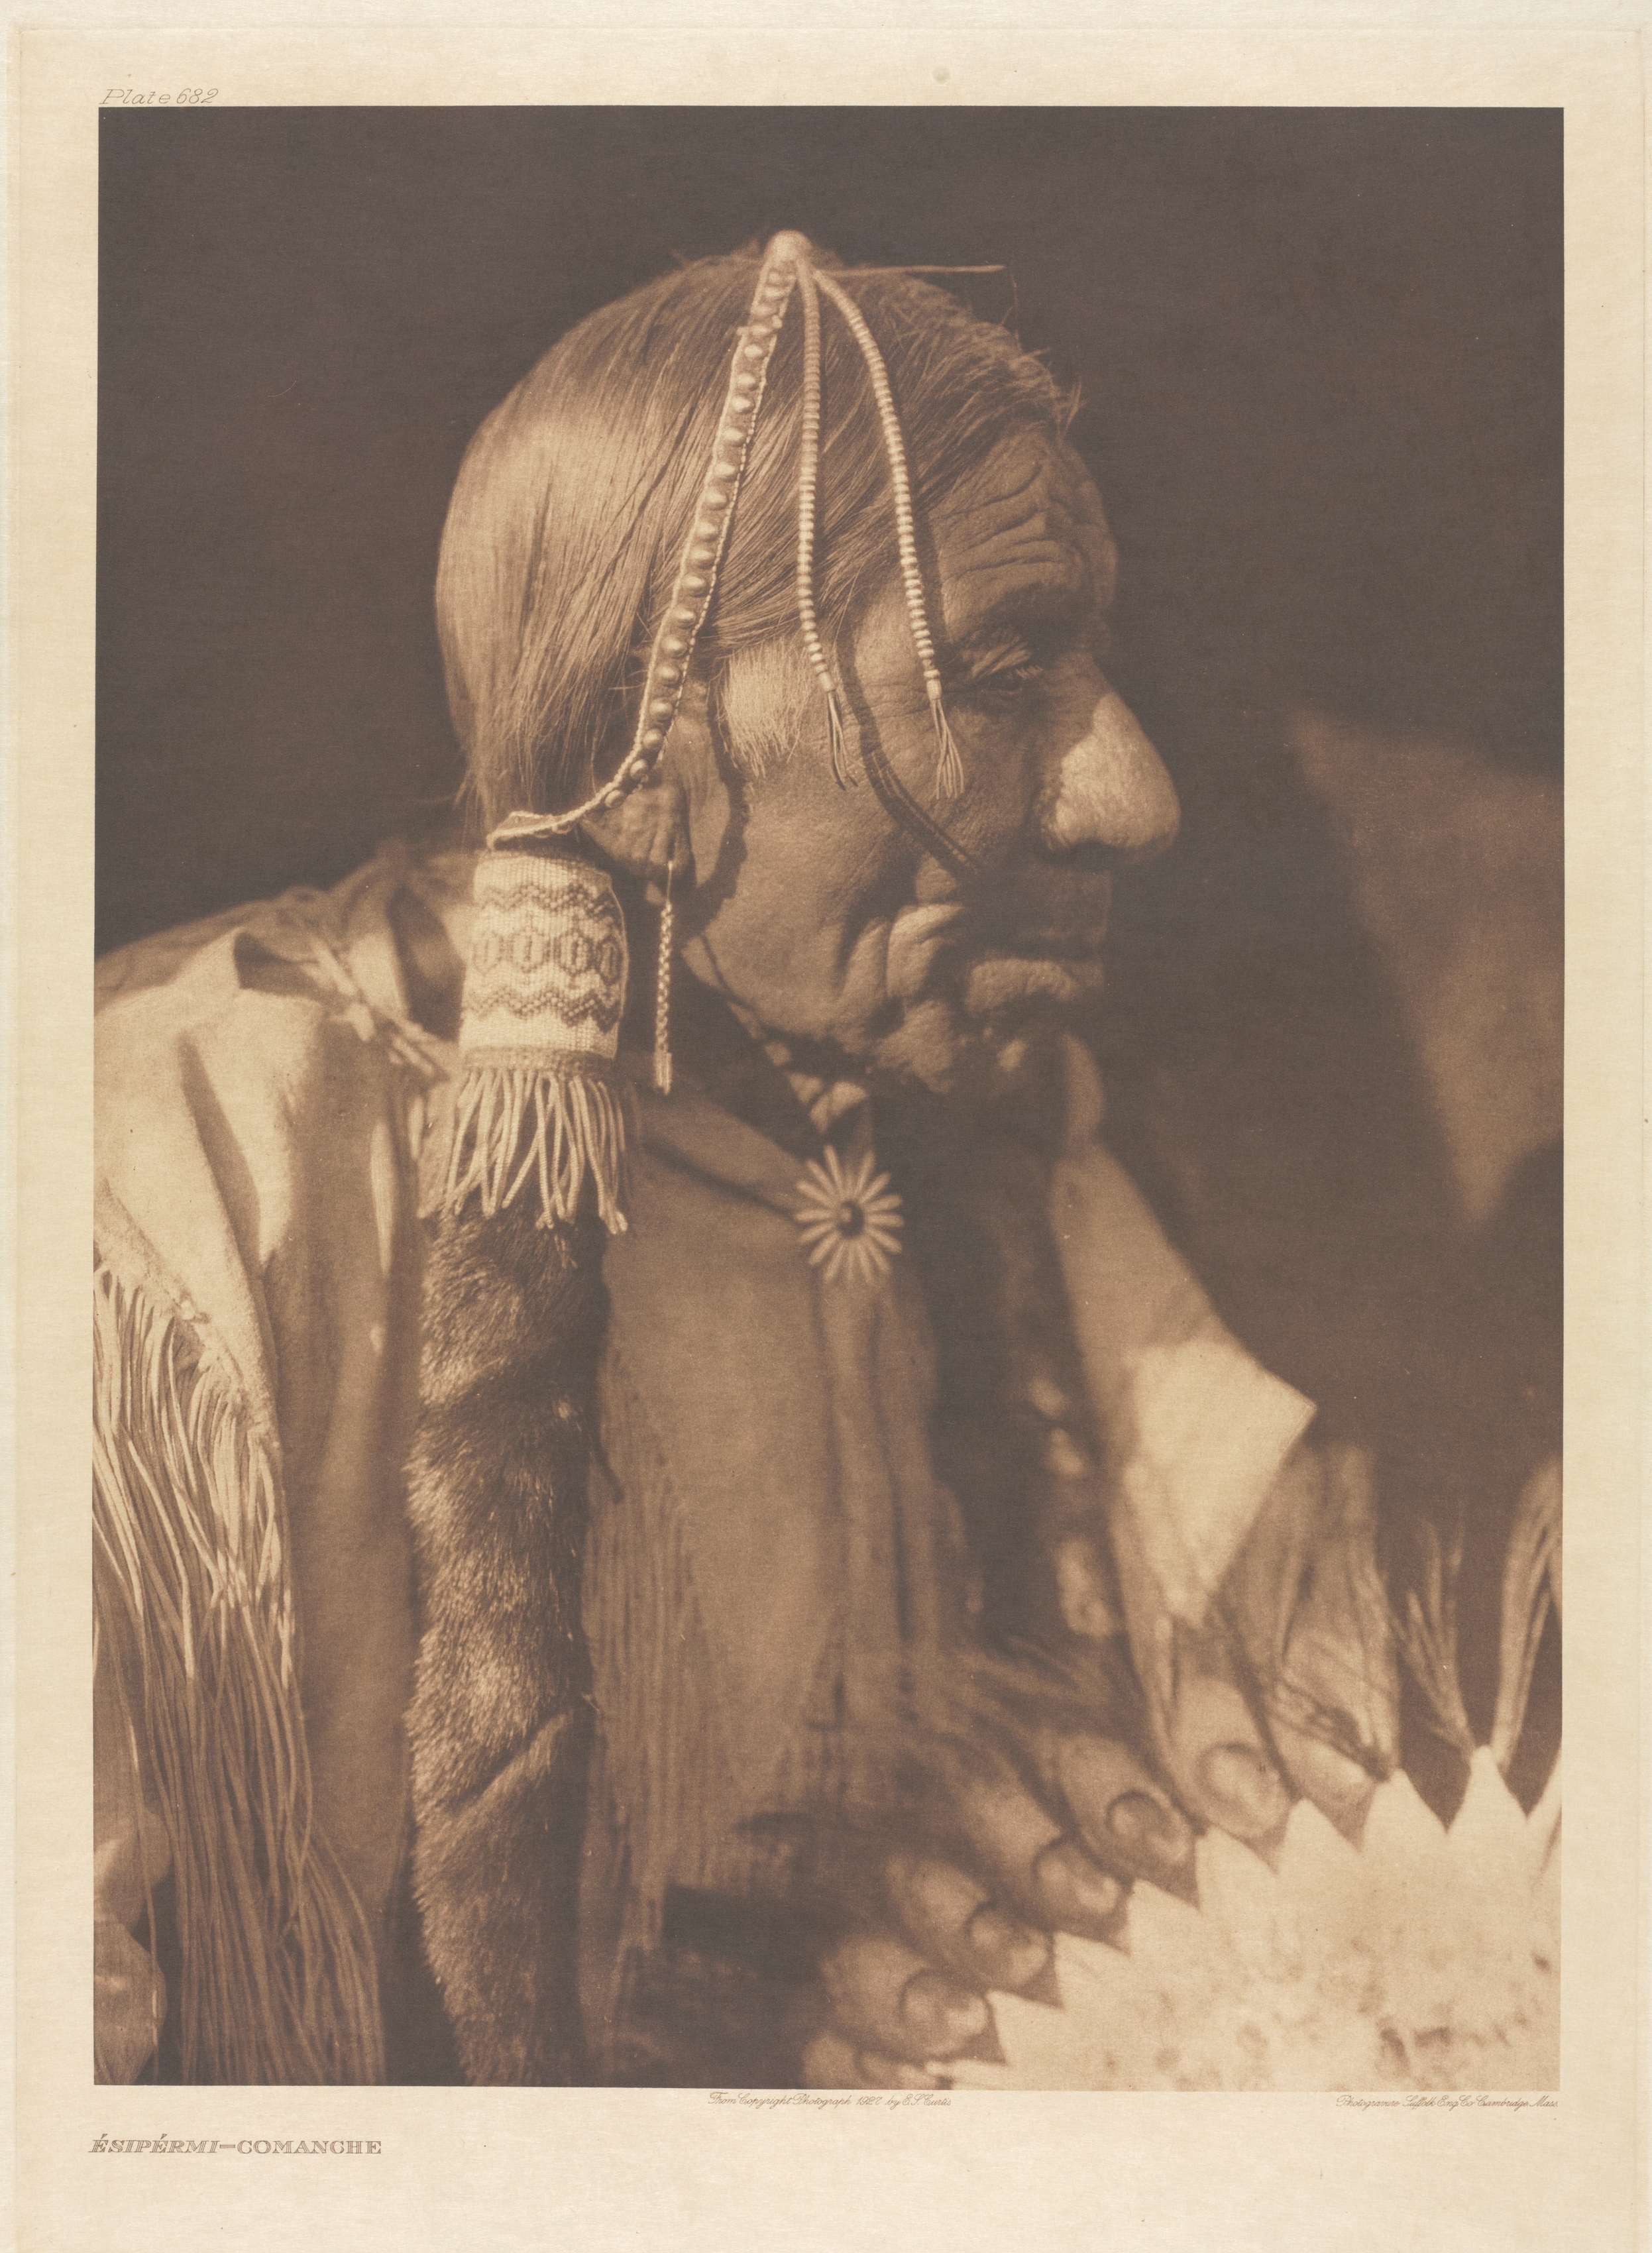 Portfolio XIX, Plate 682: Ésipérmi - Comanche